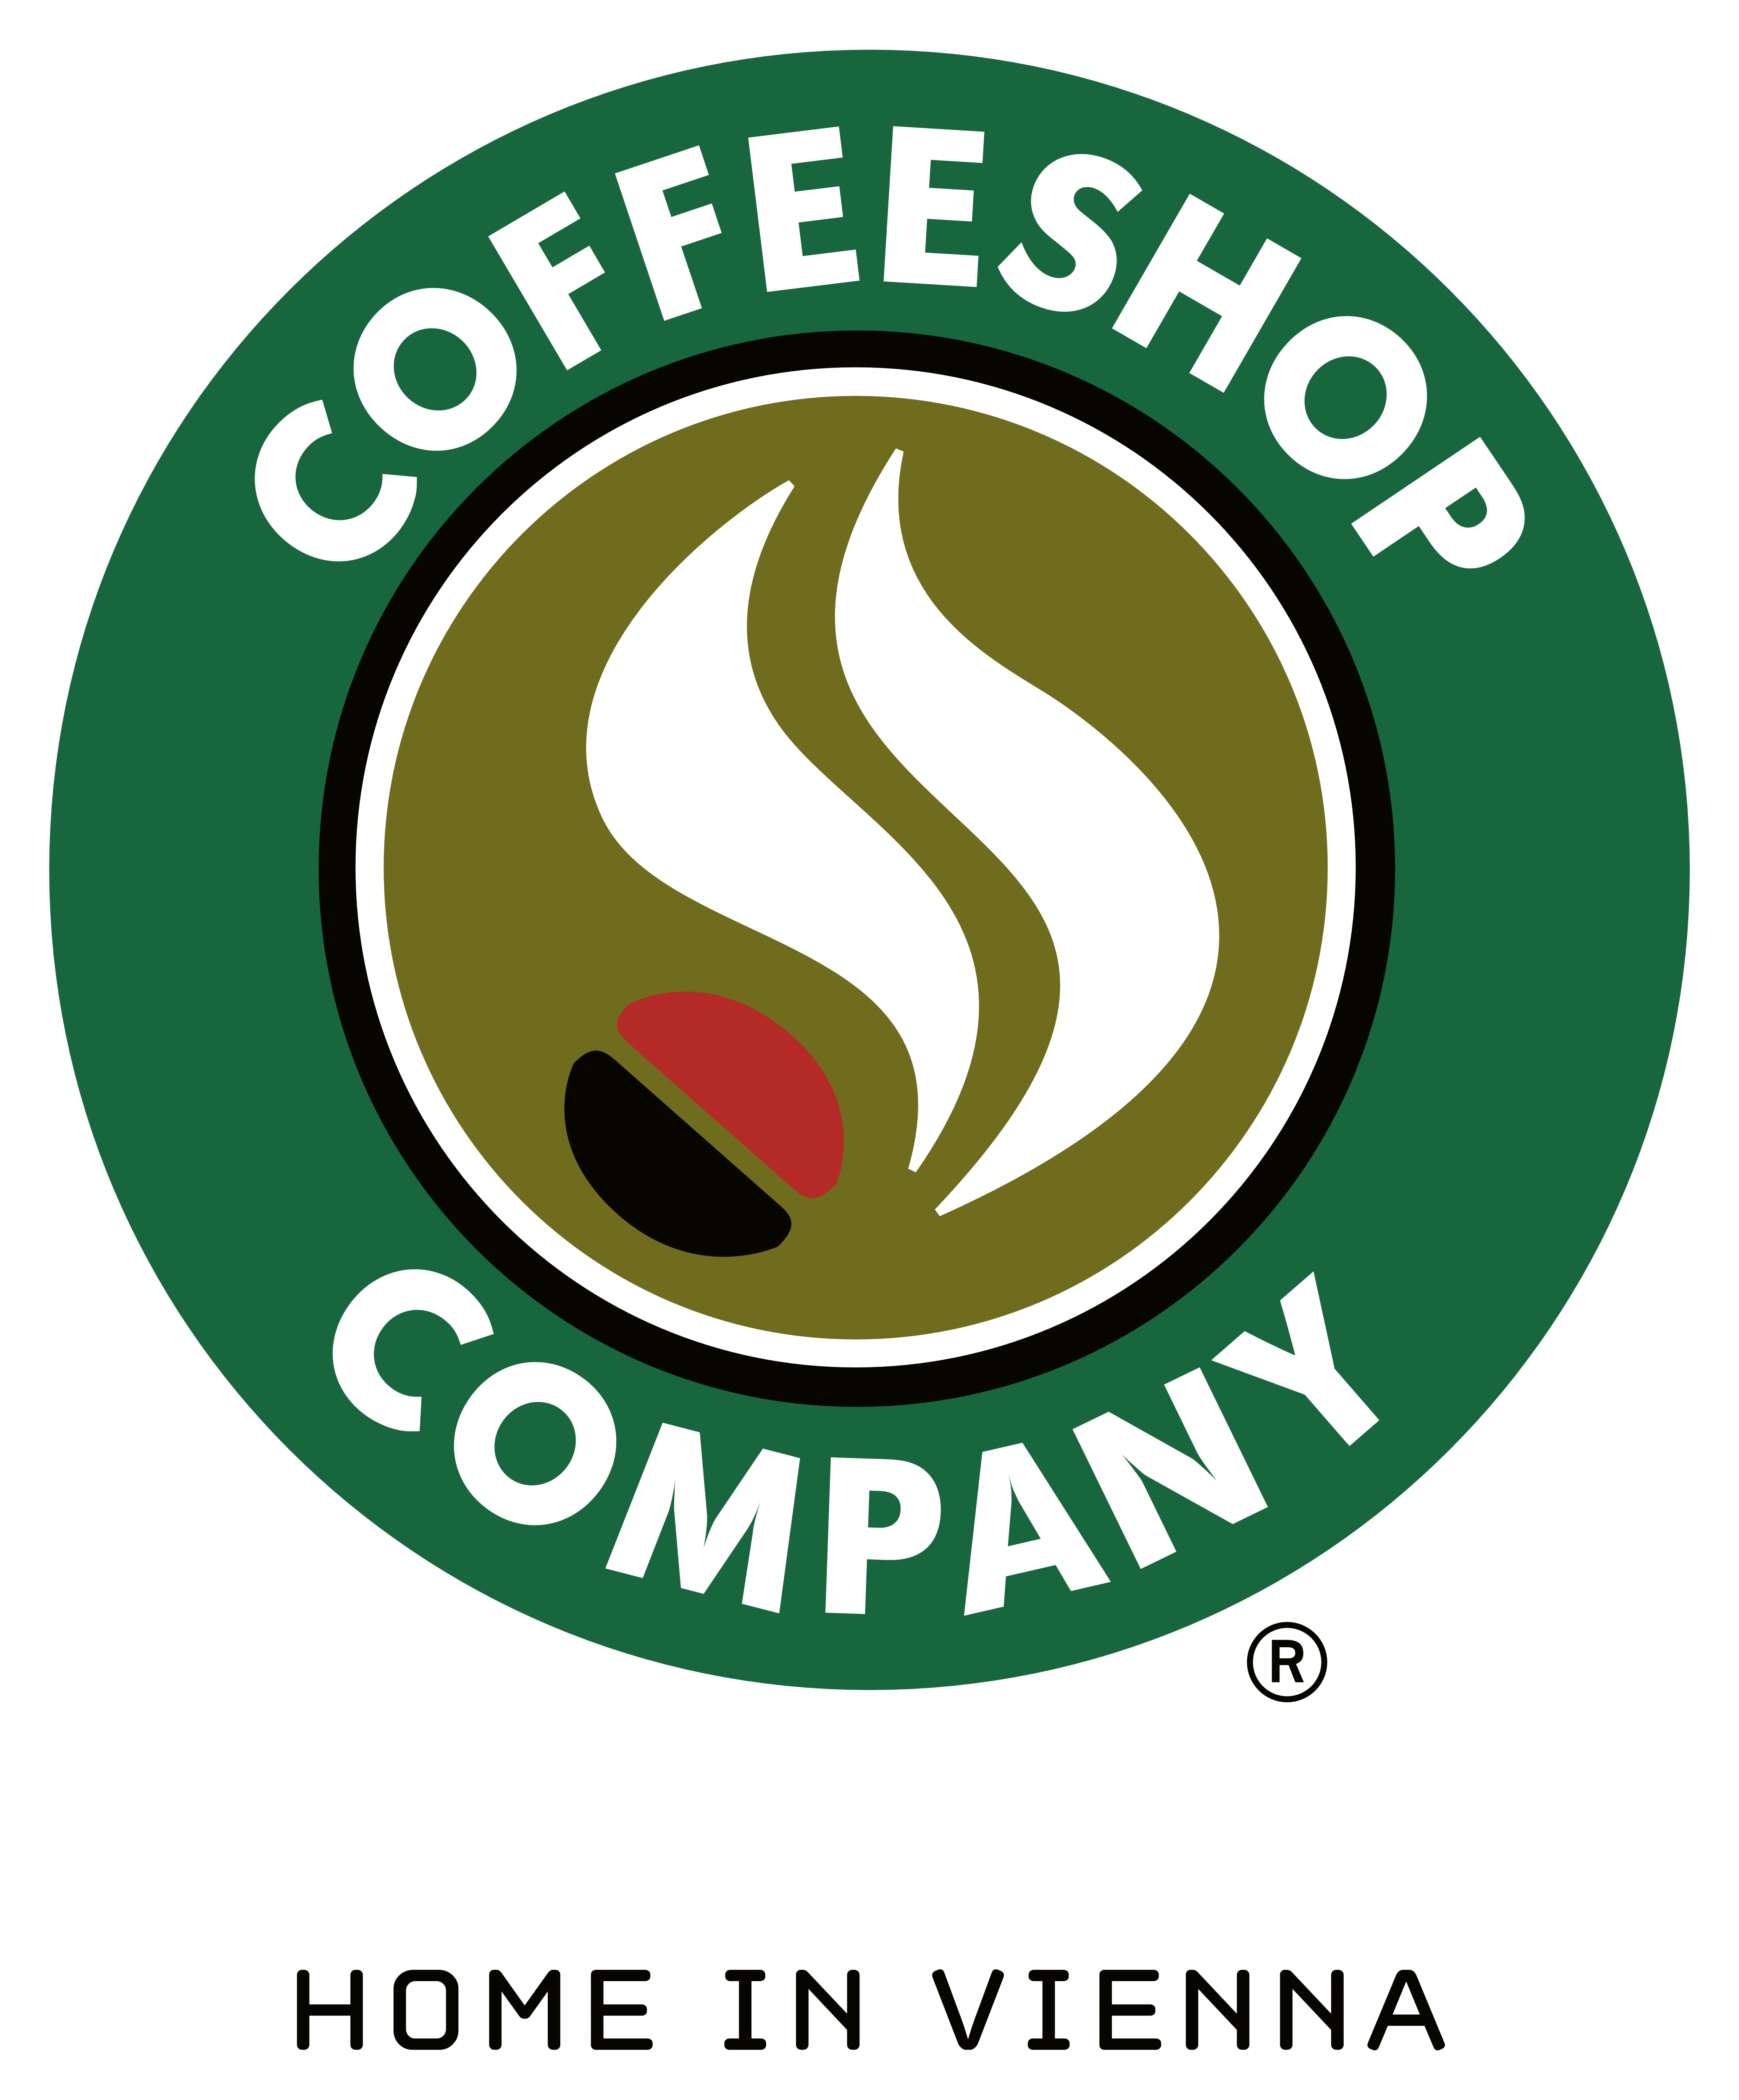 Coffeeshop Company – Logos Download